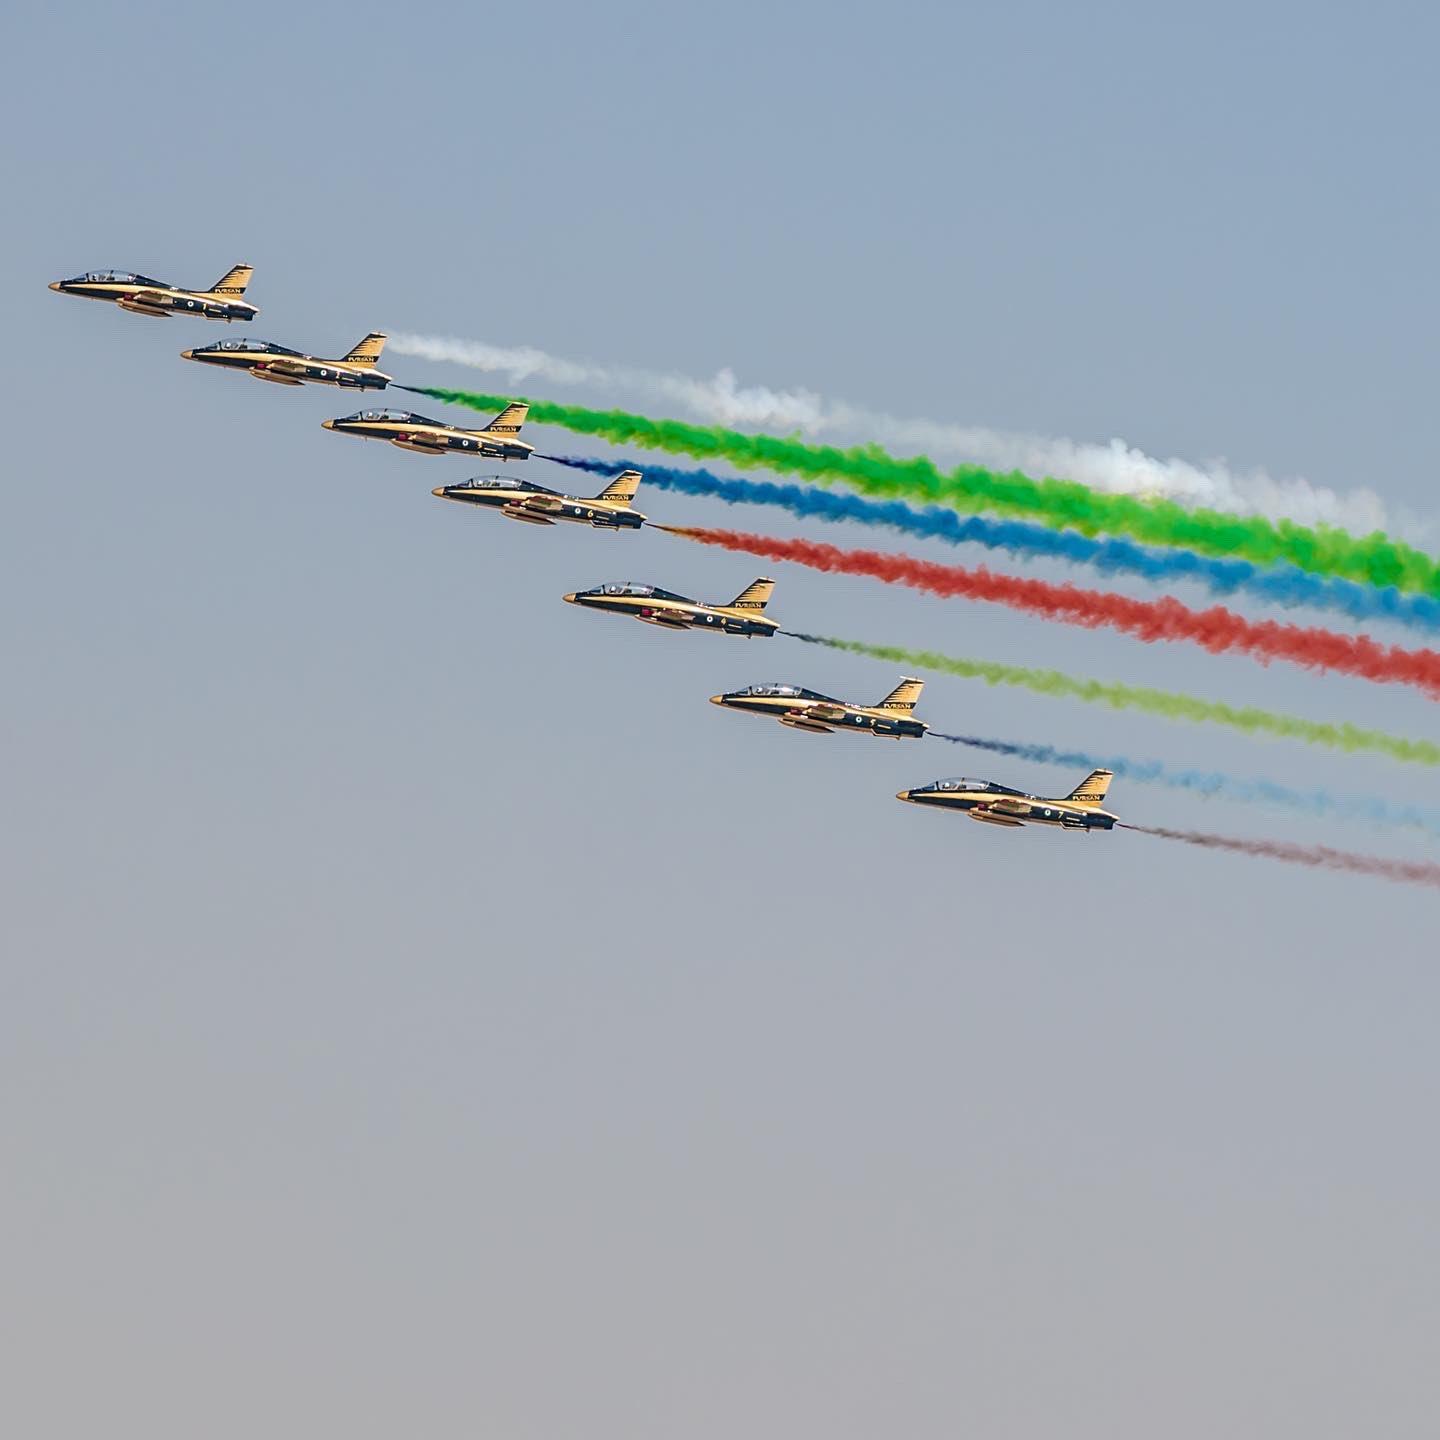 UAE says it signs agreements worth around $6.1bln during Dubai Airshow so far